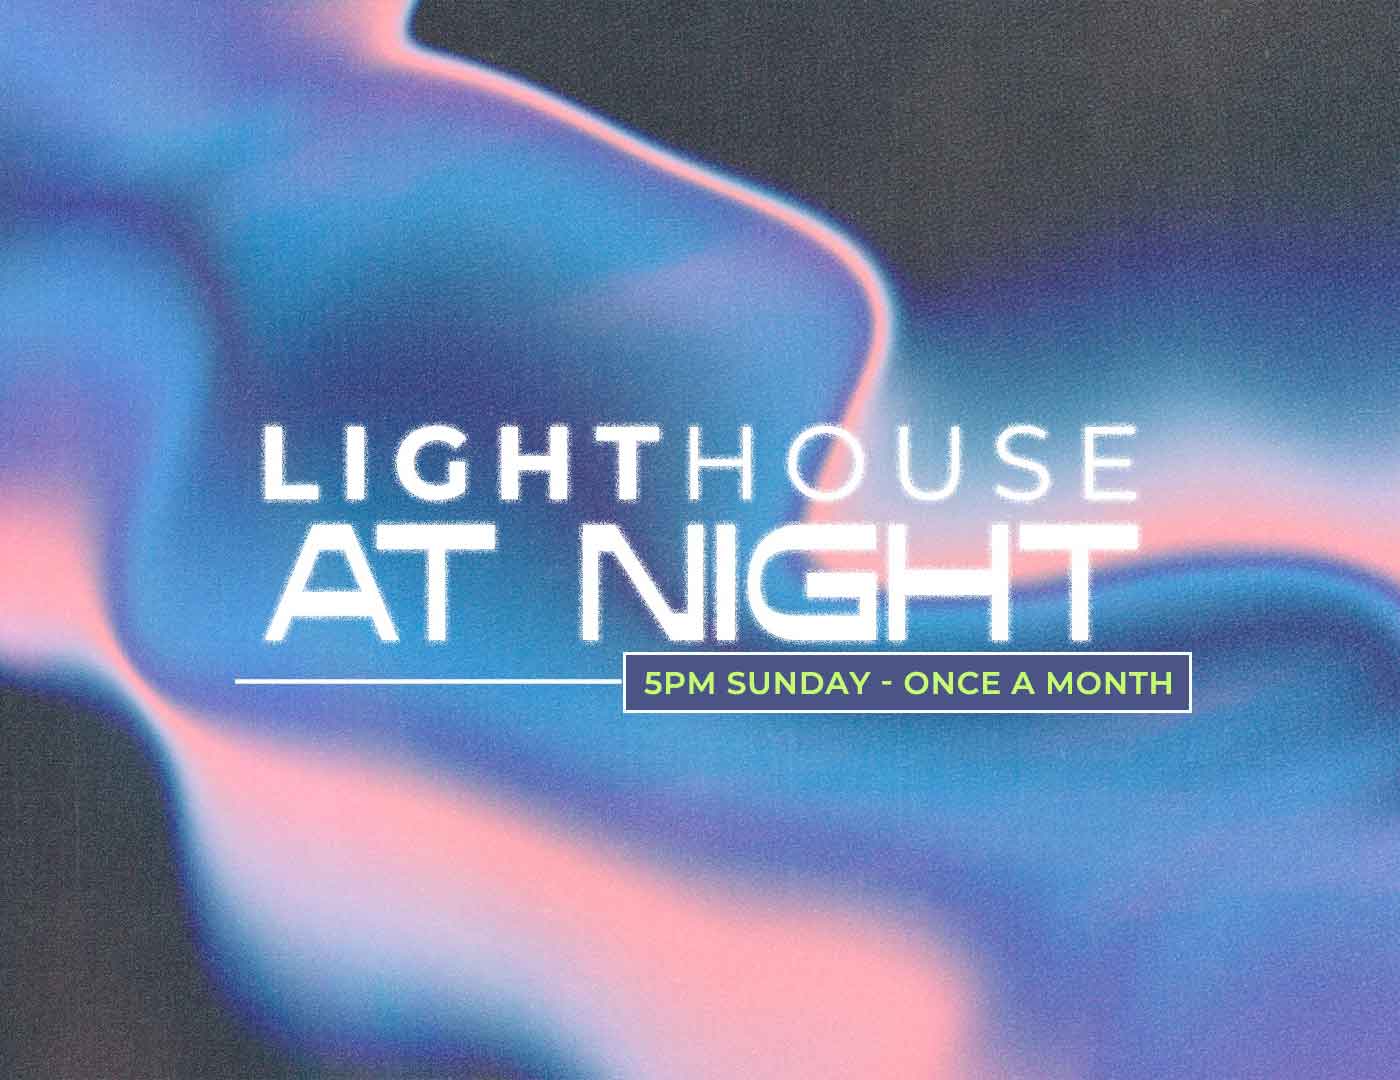 Lighthouse Church Inner City night service 5pm